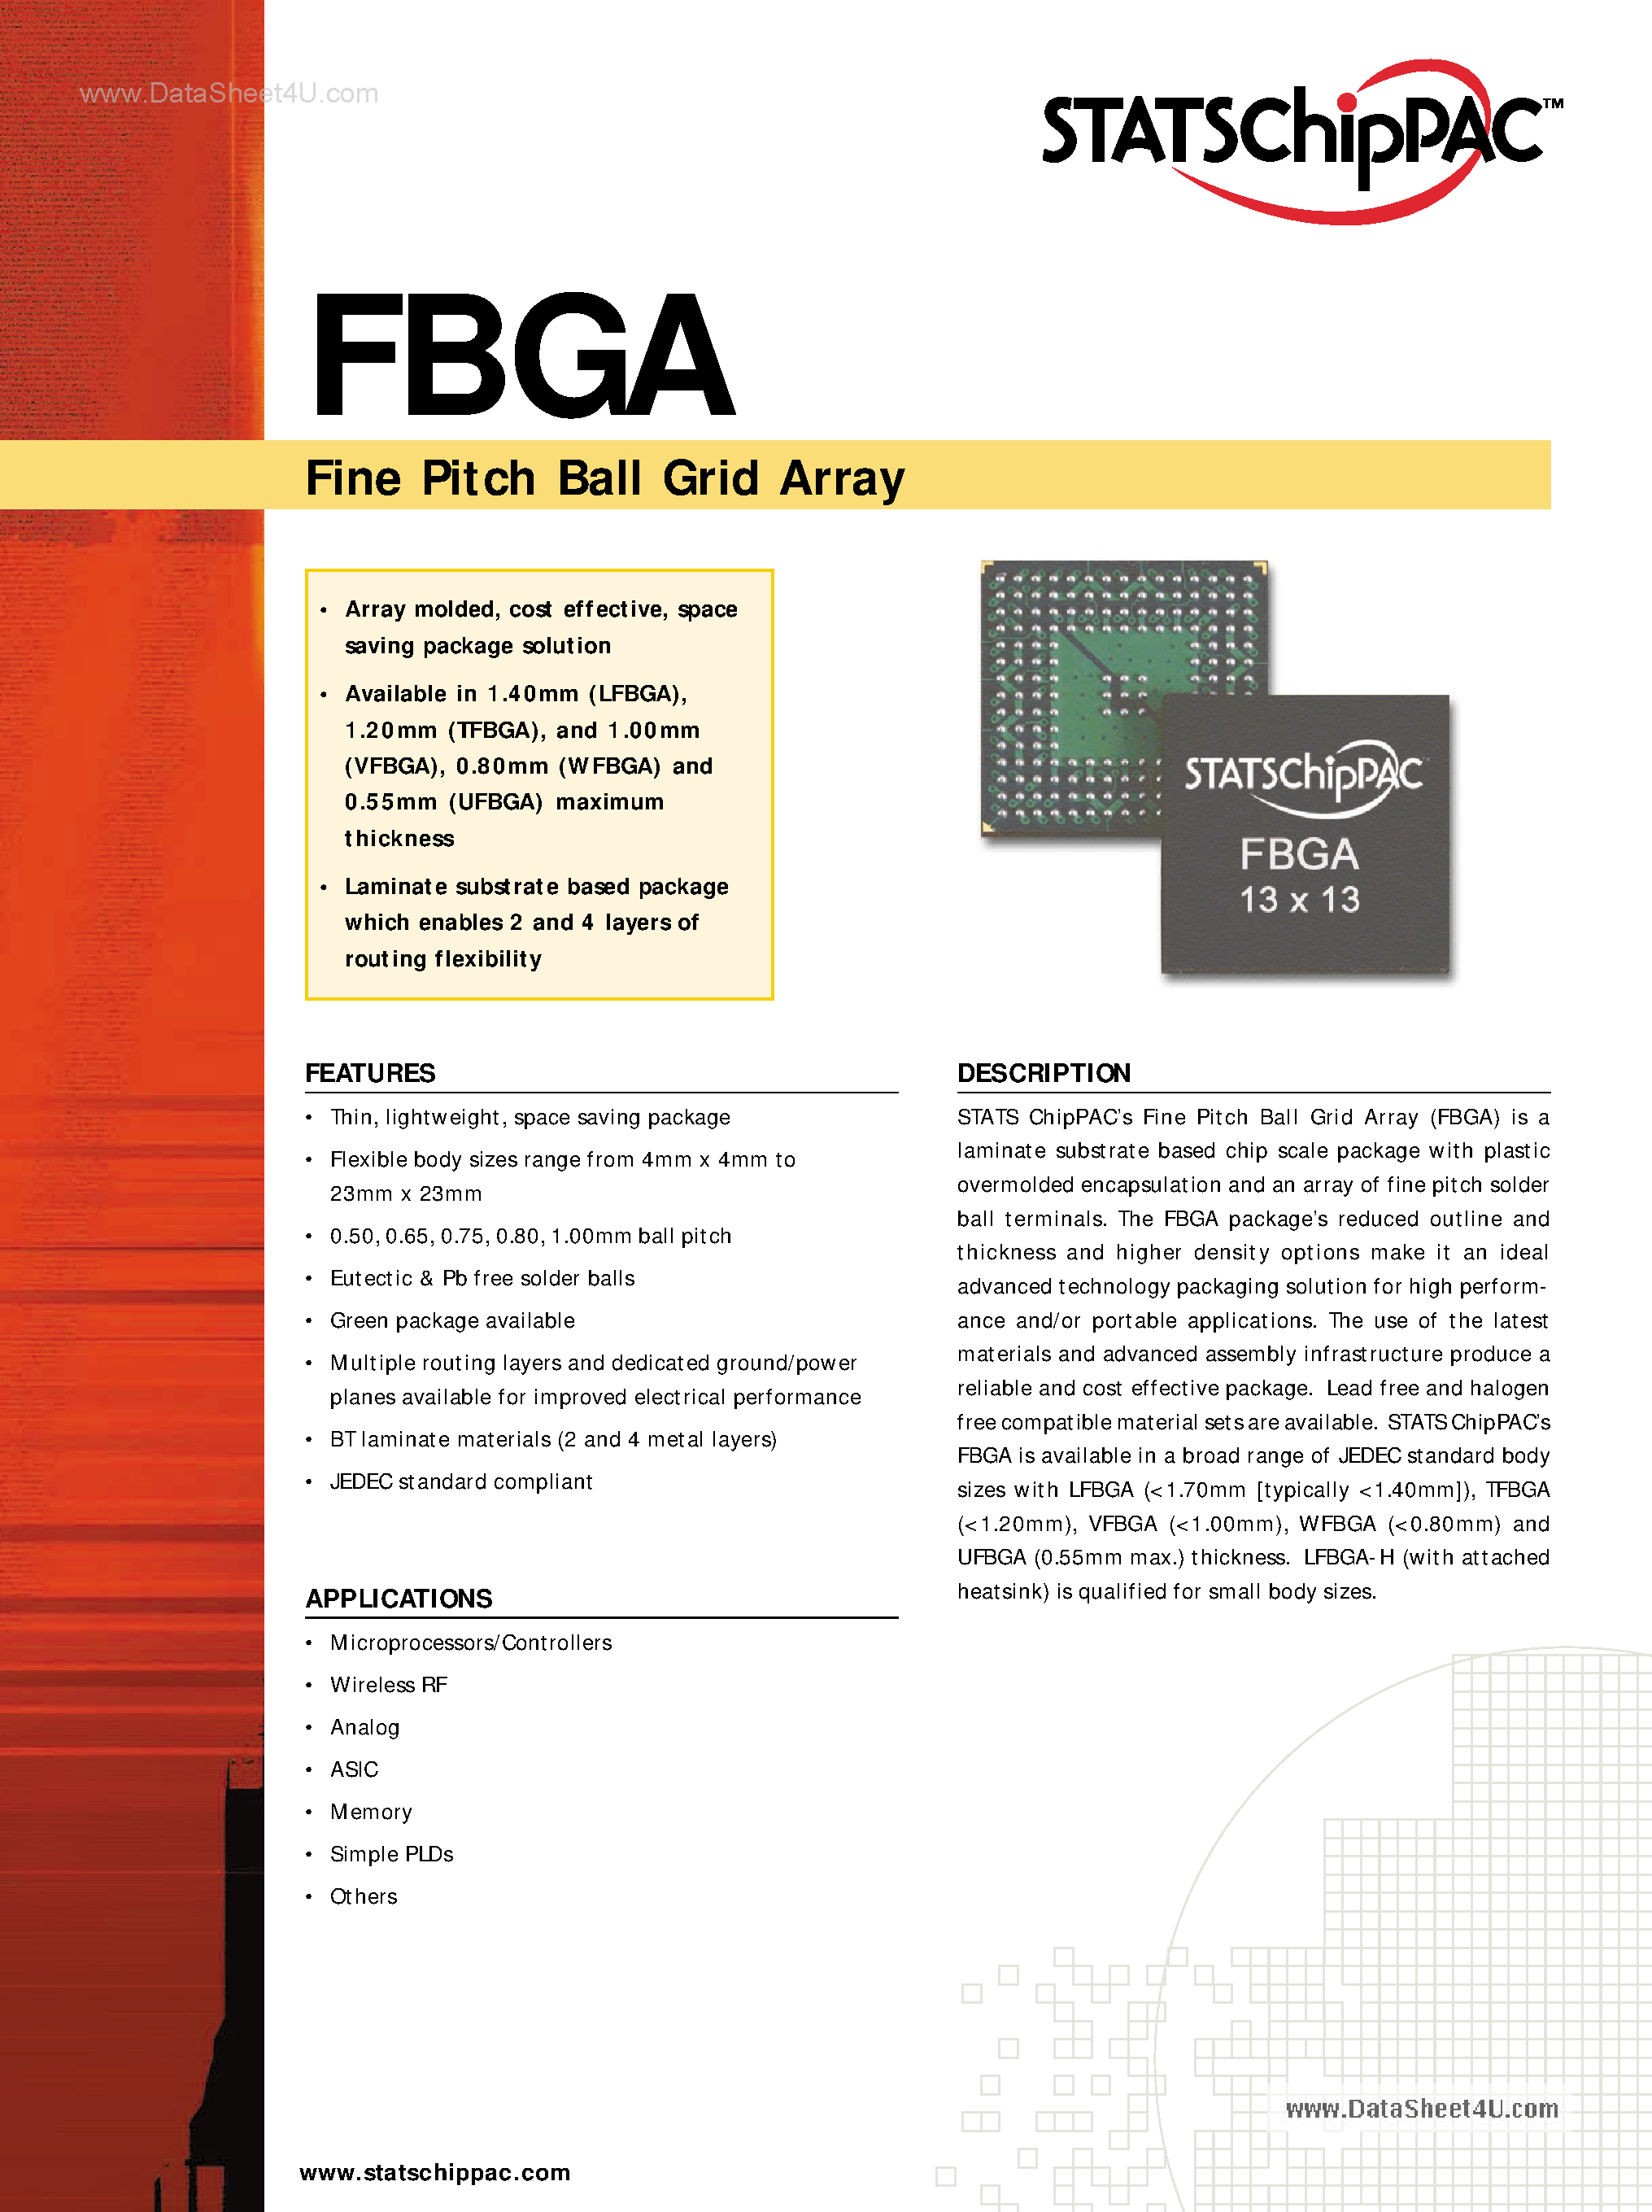 Datasheet FBGA - Fine Pitch Ball Grid Array page 1